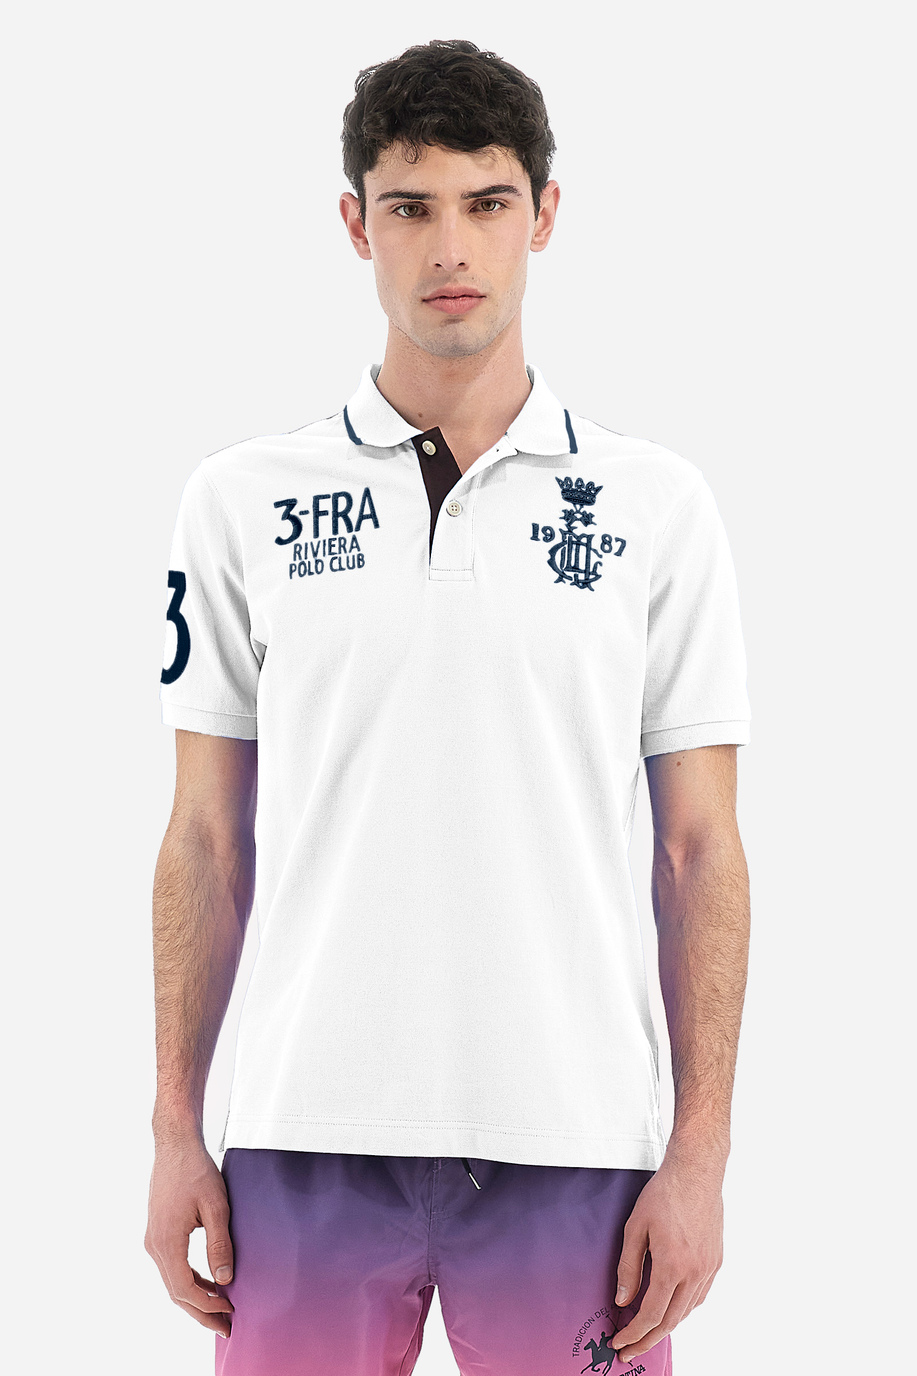 Regular fit 100% cotton short-sleeved polo shirt for men - Valma - Apparel | La Martina - Official Online Shop